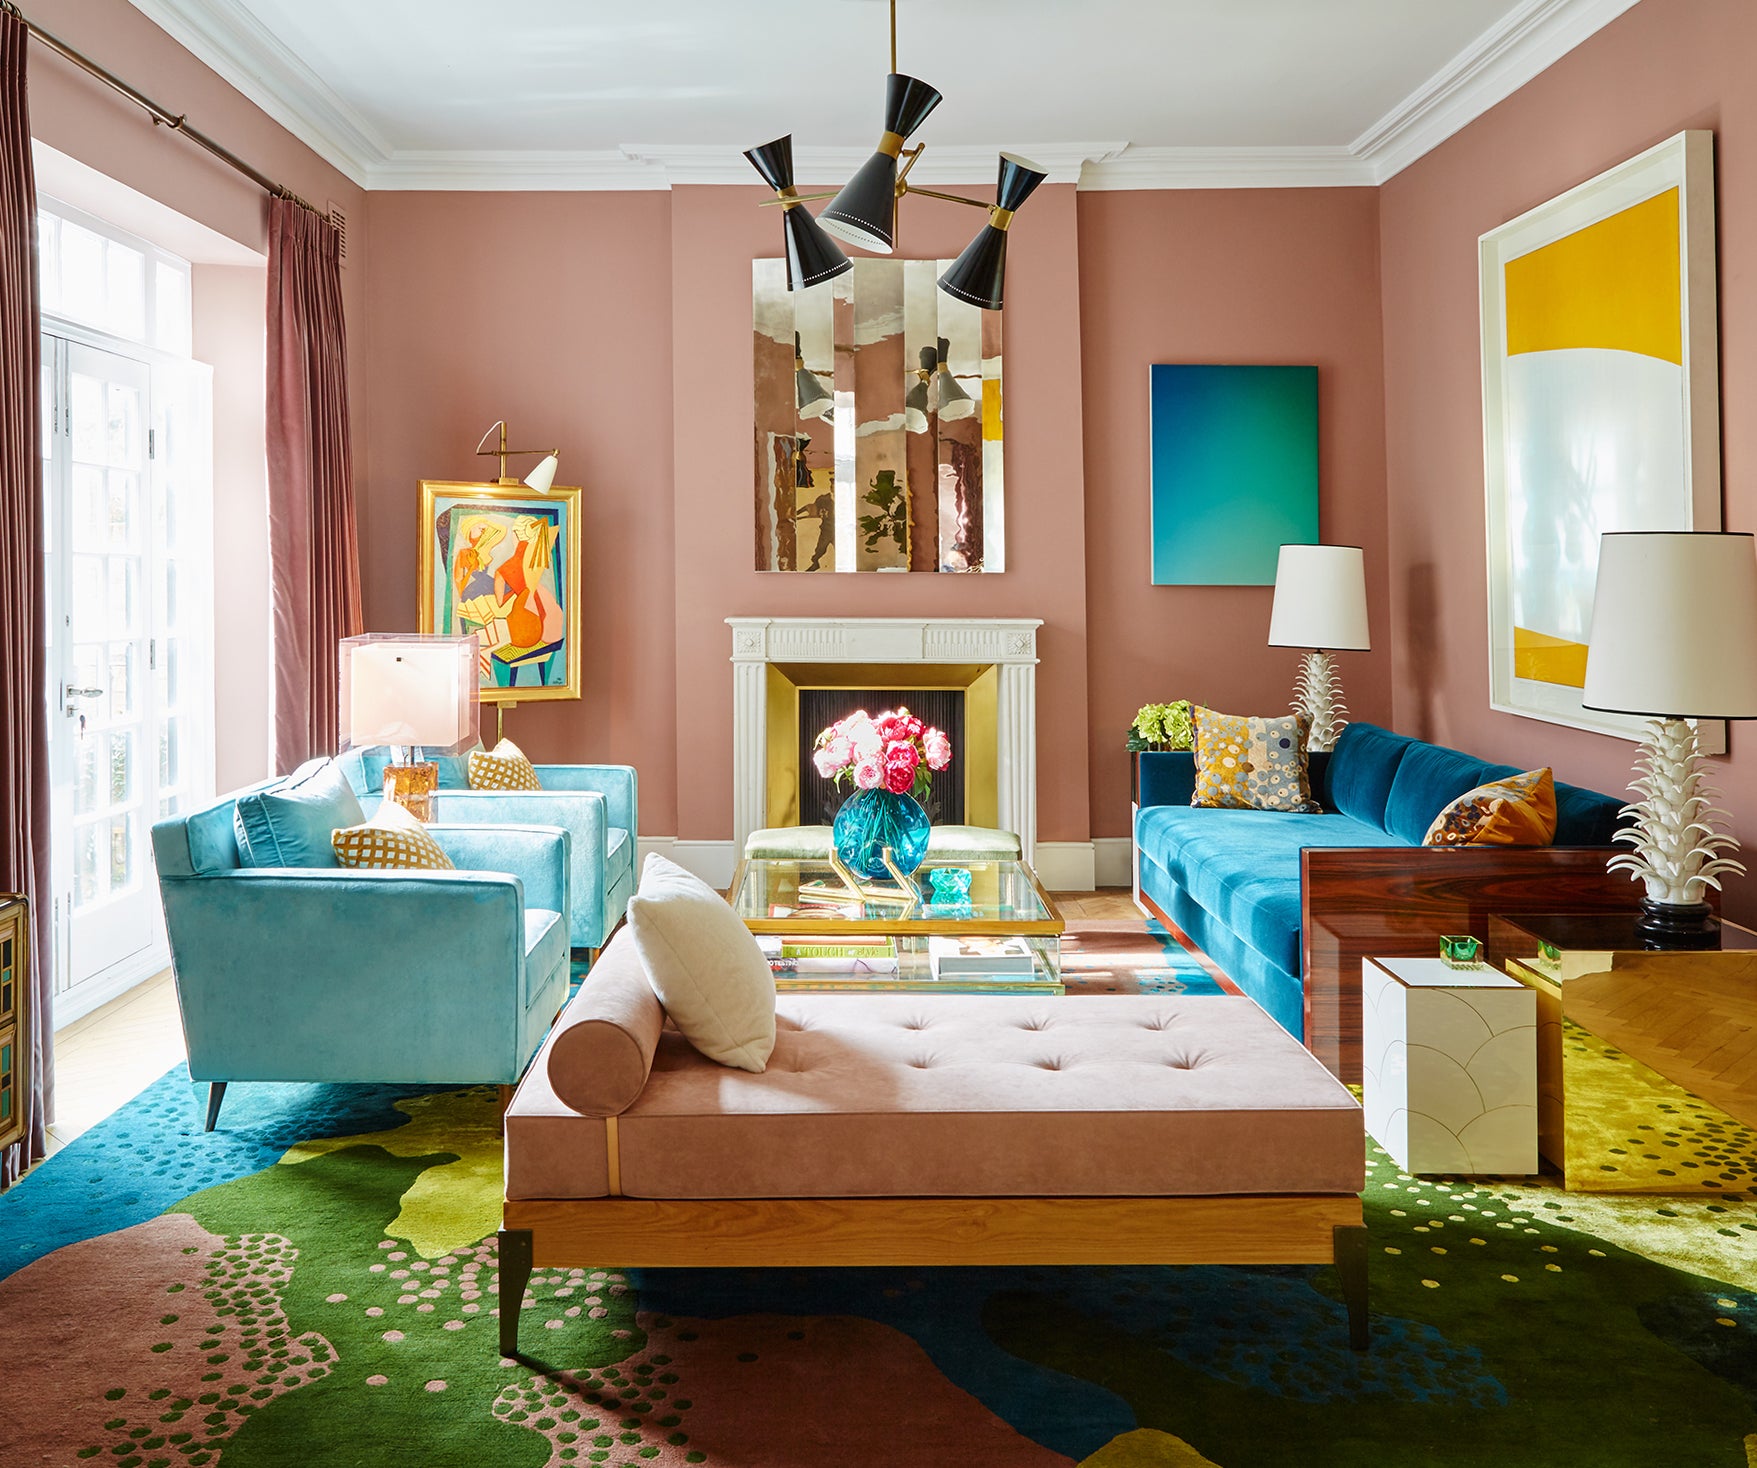 Fun Design Ideas For Adding Color Into Your Home